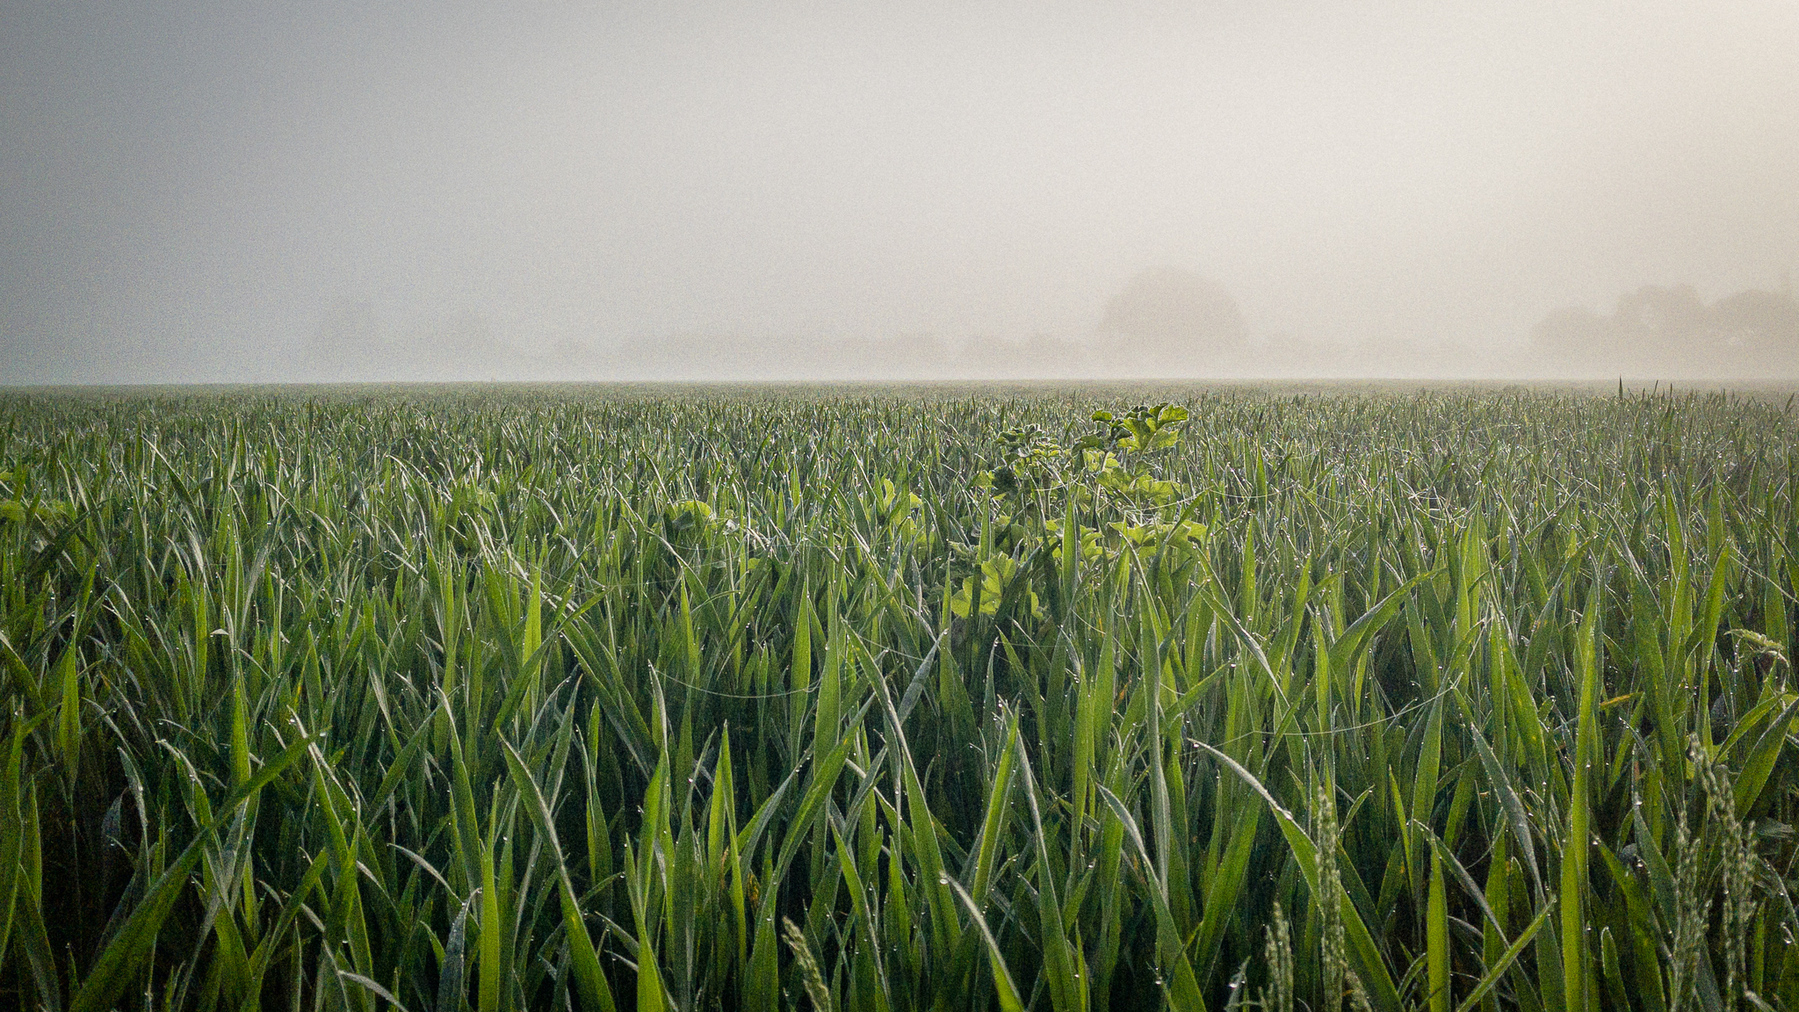 misty morning walk through the fields